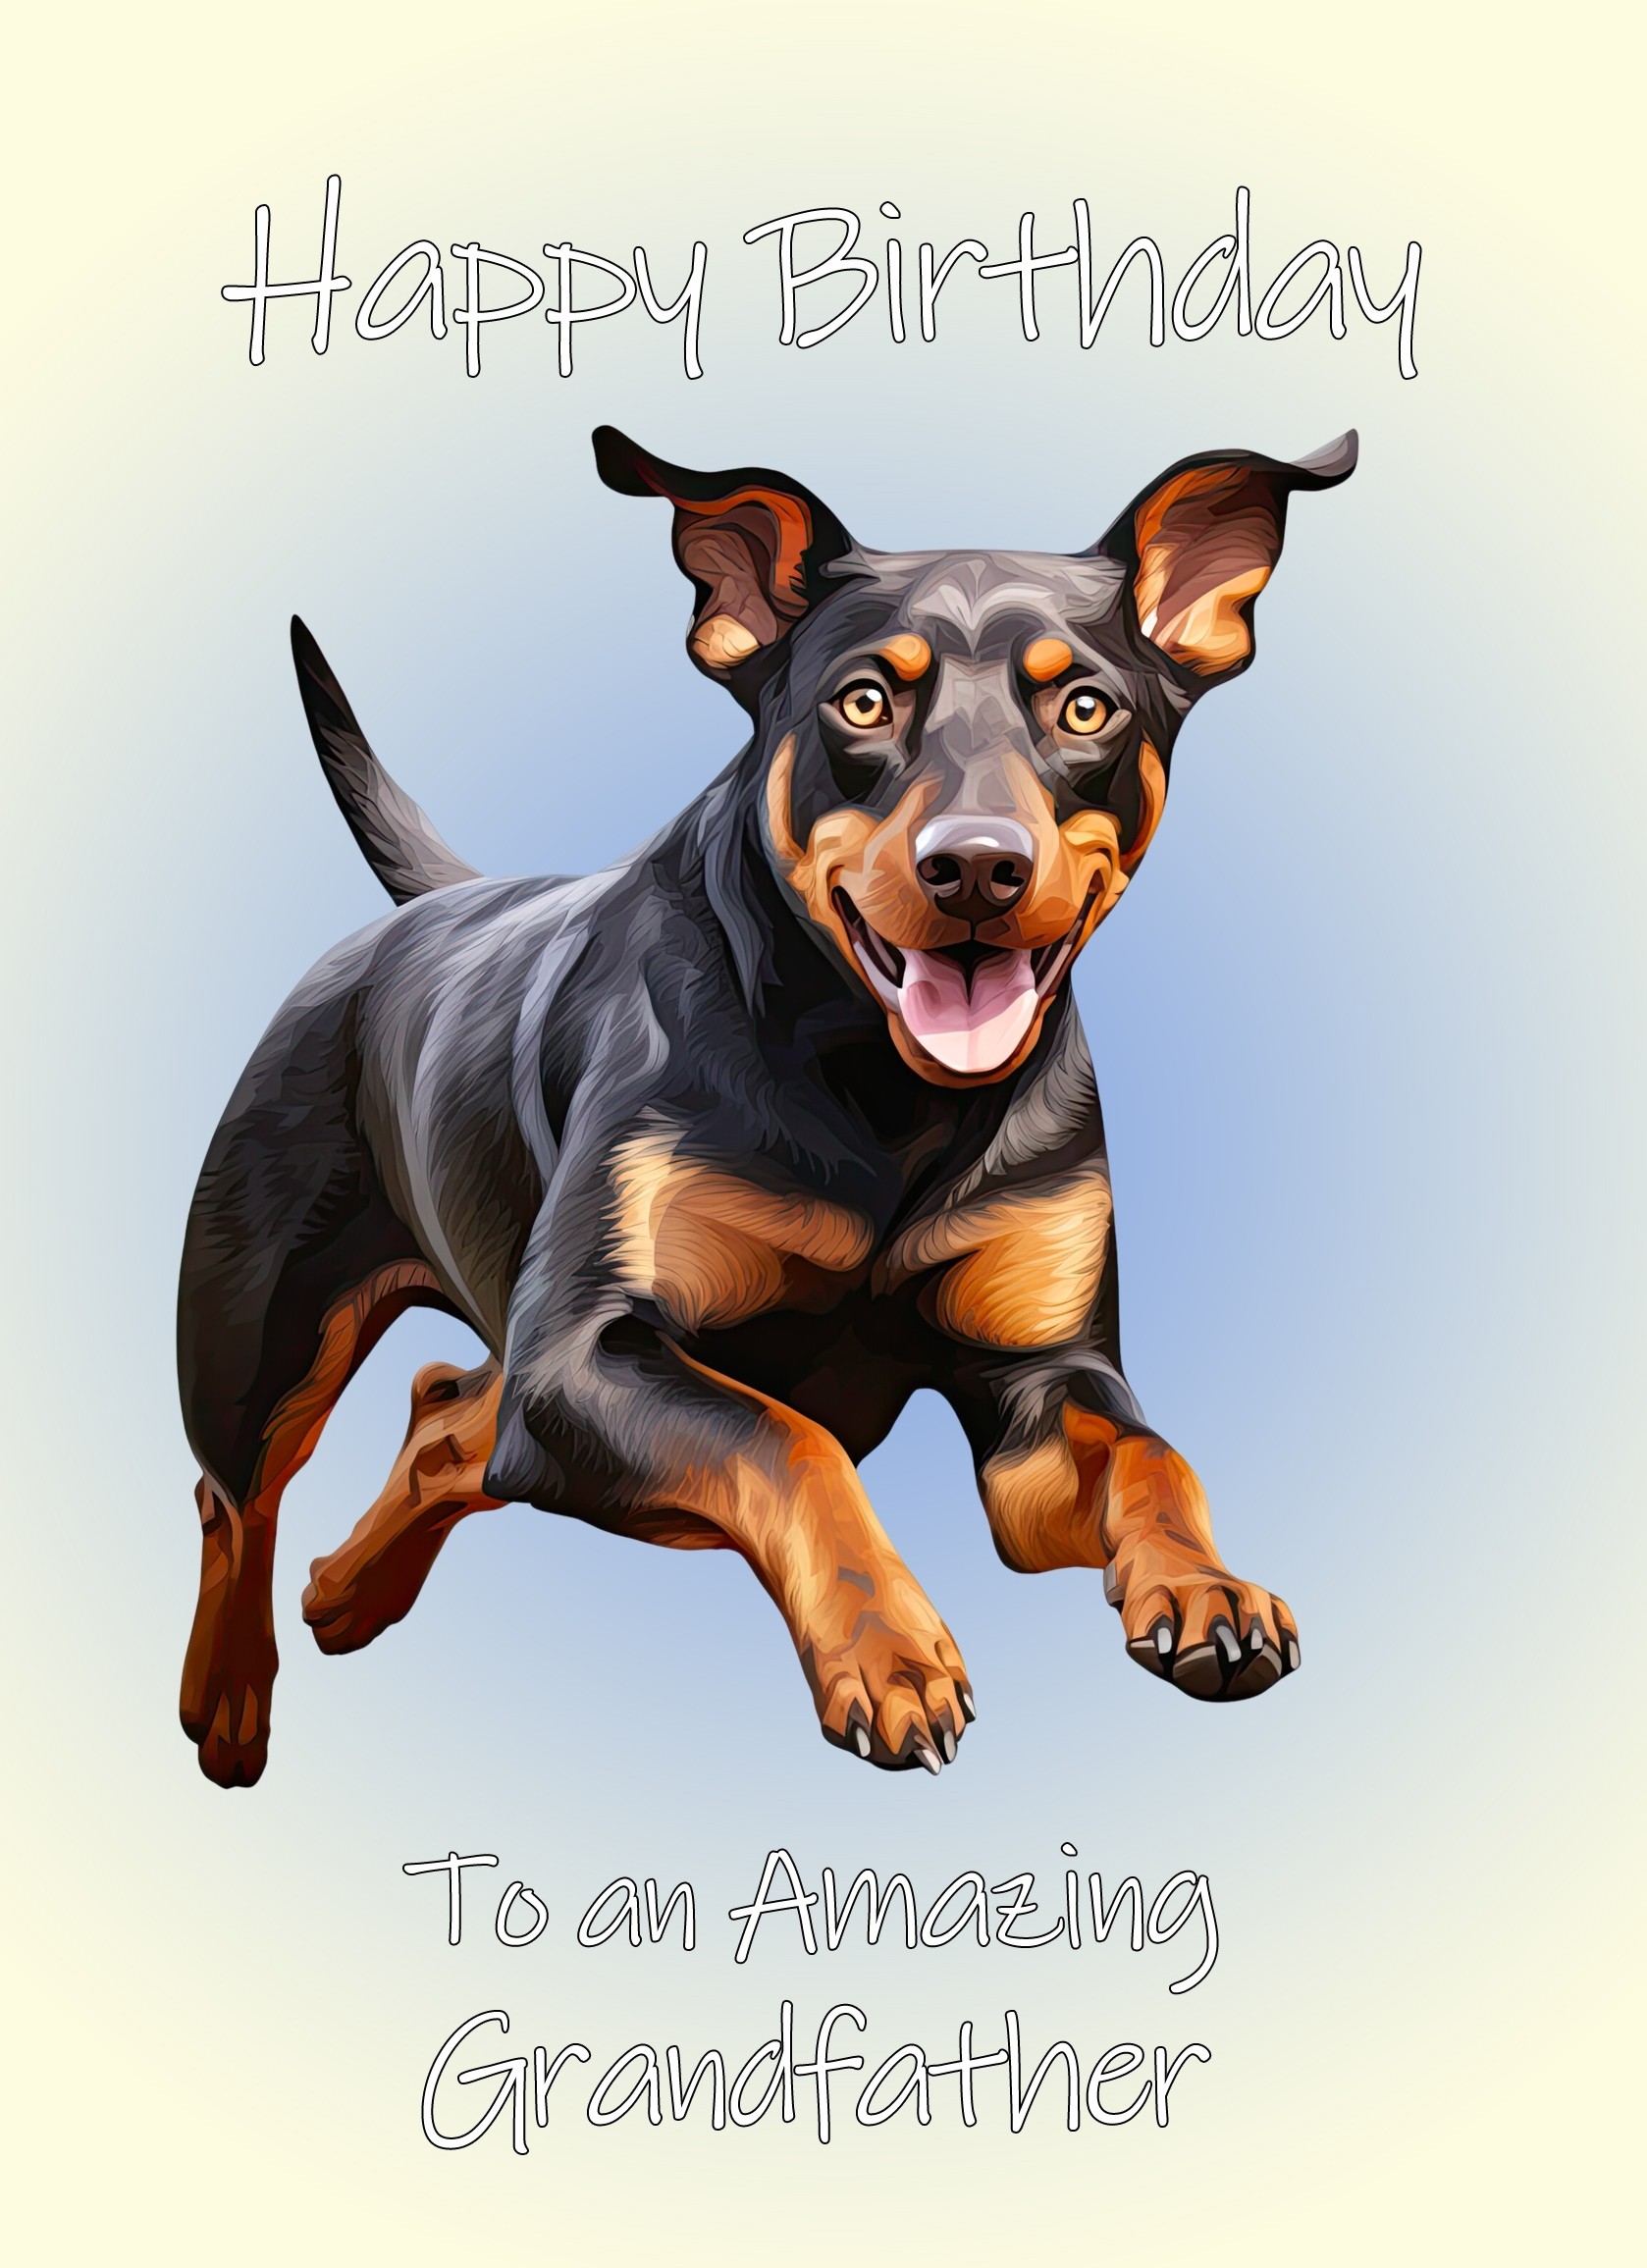 Doberman Dog Birthday Card For Grandfather